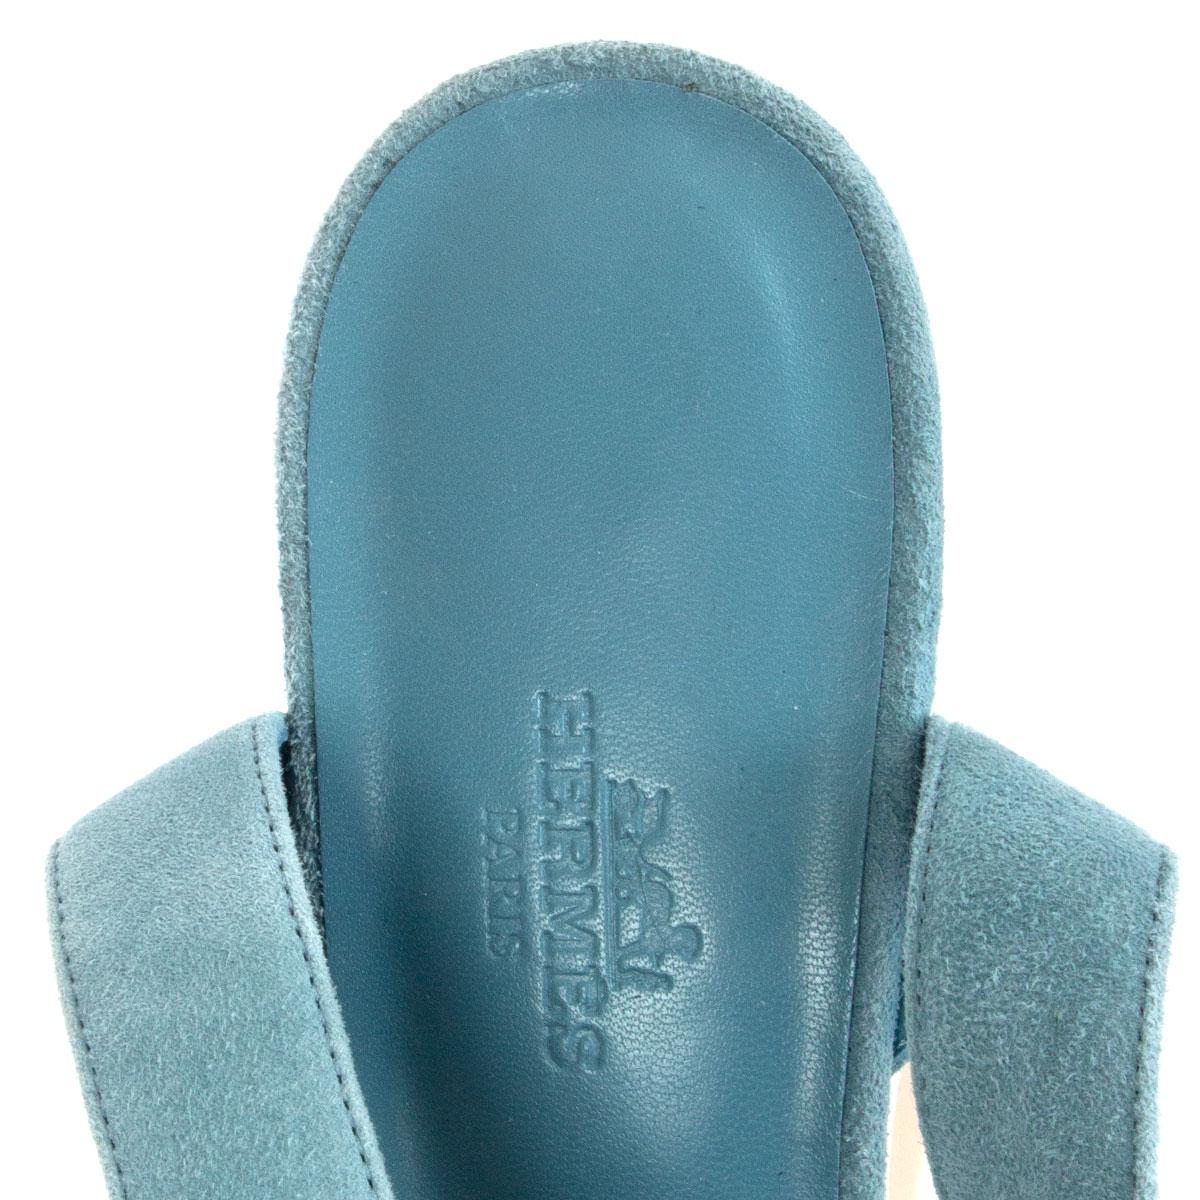 Gray HERMES light blue suede TENDRESSE Cloud Wedge Platform Sandals Shoes 38.5